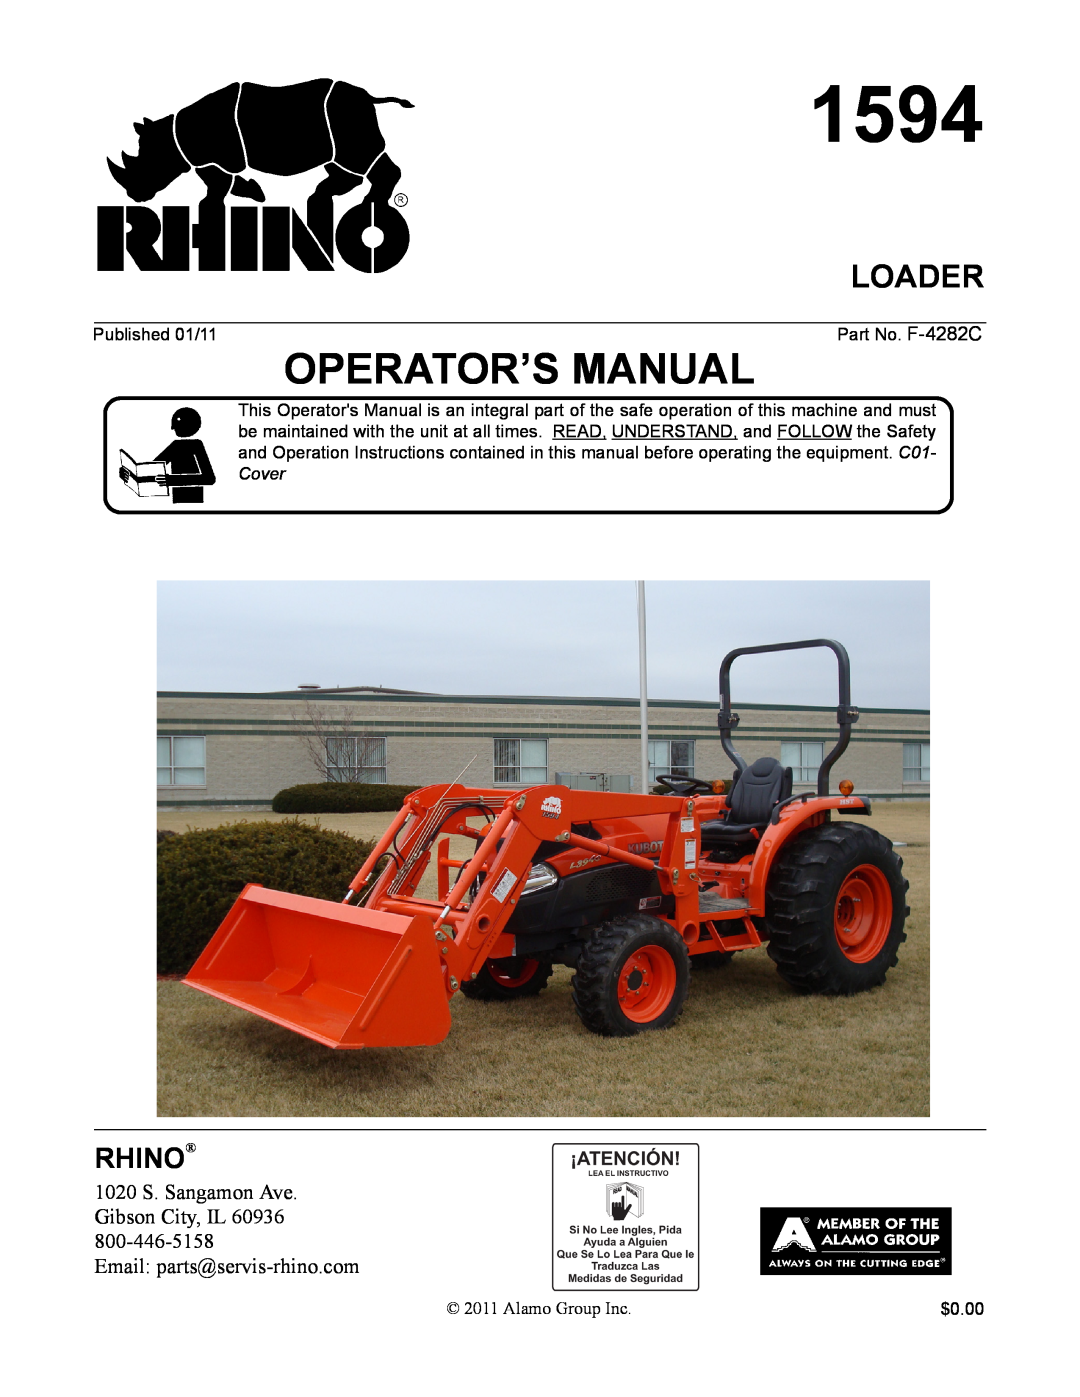 Rhino Mounts 1594 manual Loader, Operator’S Manual, Rhino, 1020 S. Sangamon Ave Gibson City, IL 60936 